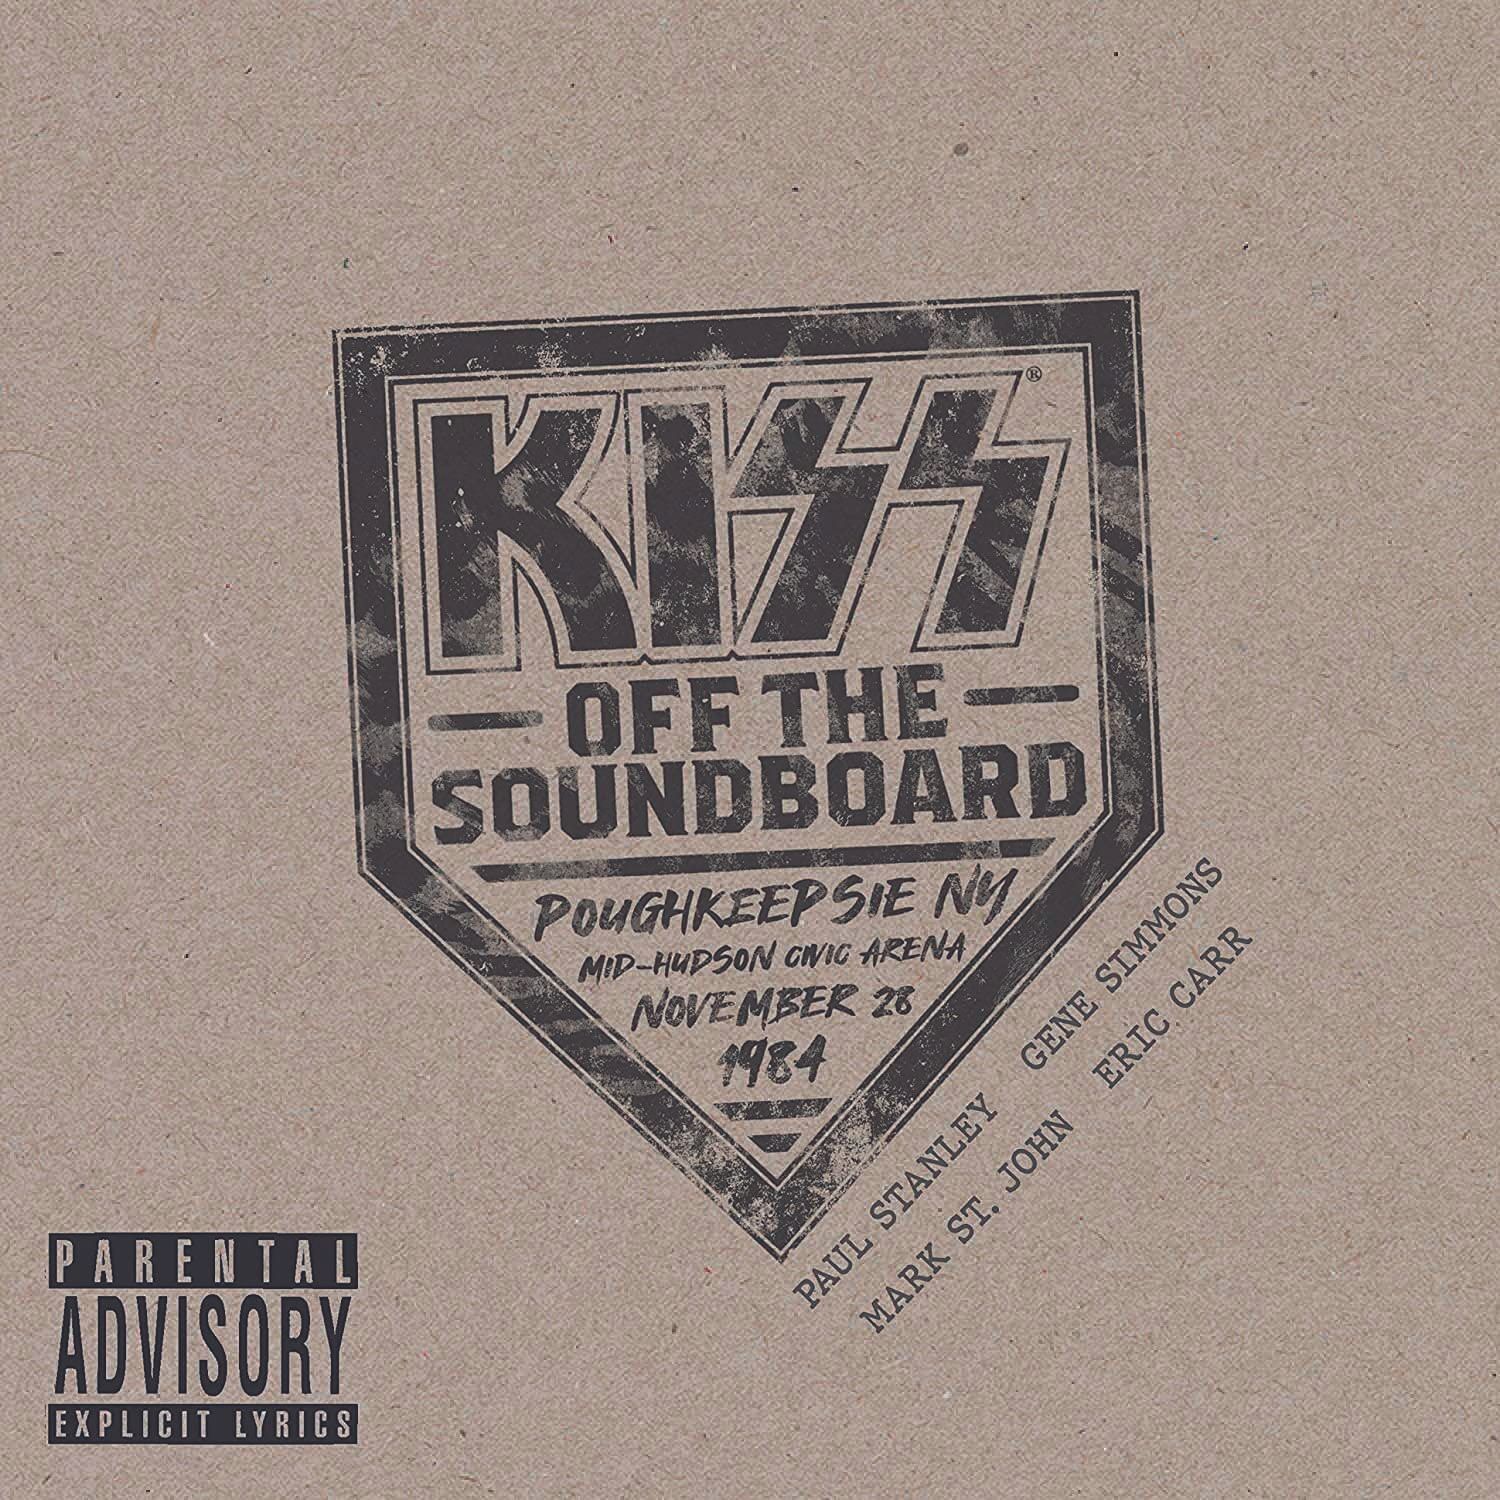 Kiss - Off The Soundboard Poughkeepsie 1984